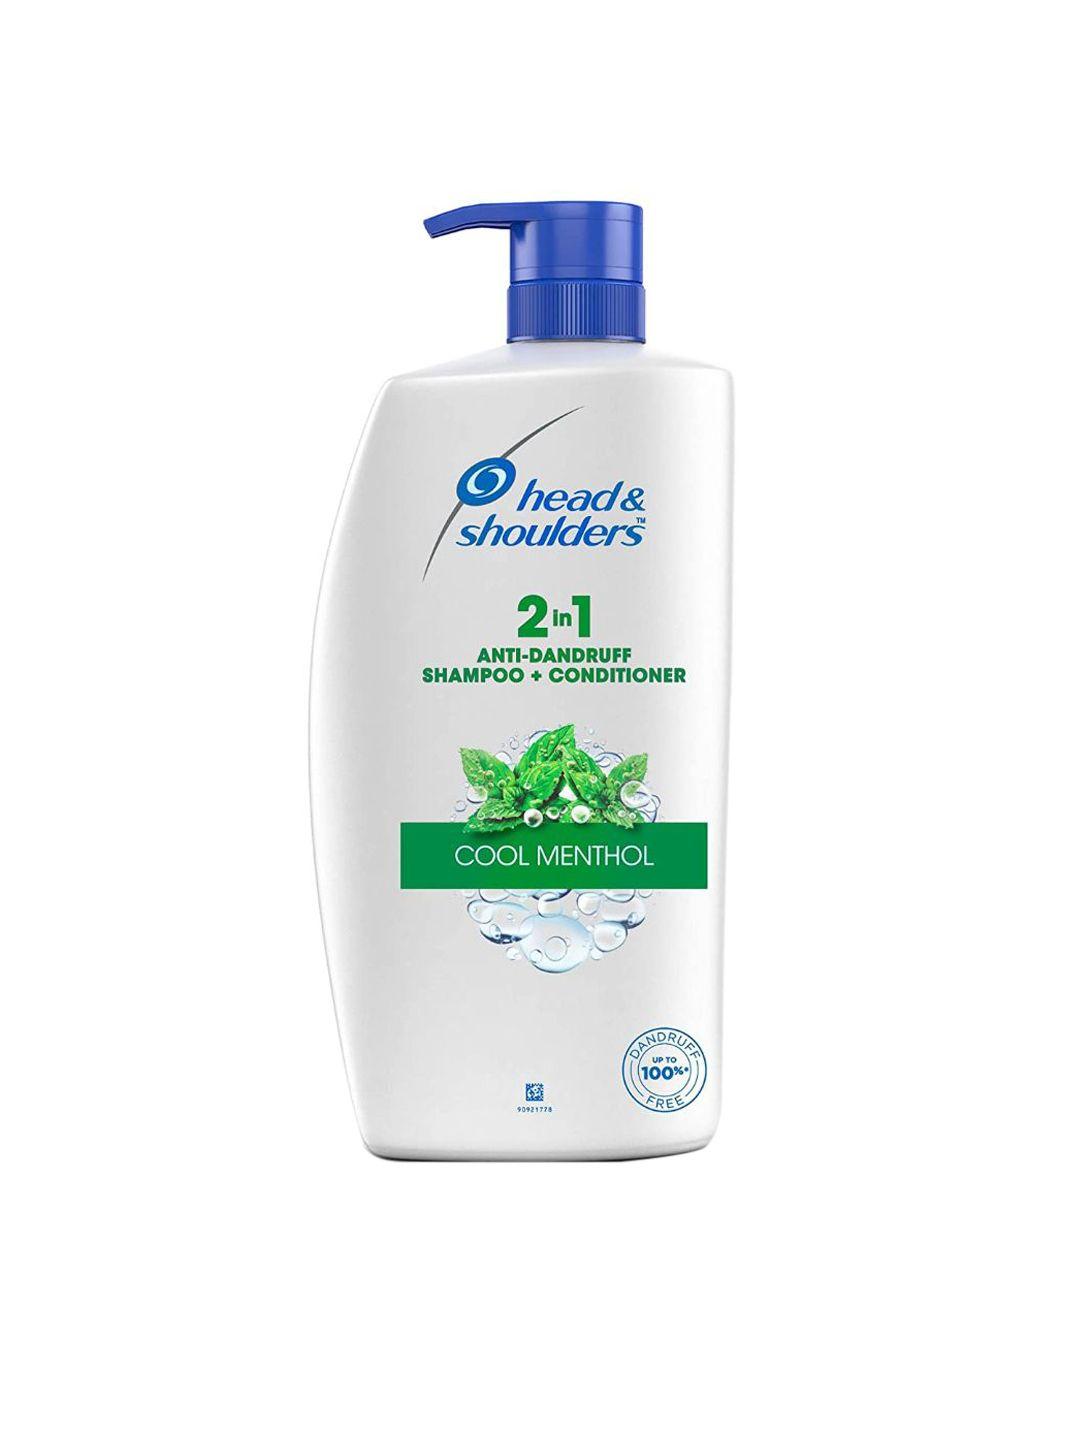 head & shoulders cool menthol 2-in-1 anti dandruff shampoo + conditioner - 1 litre